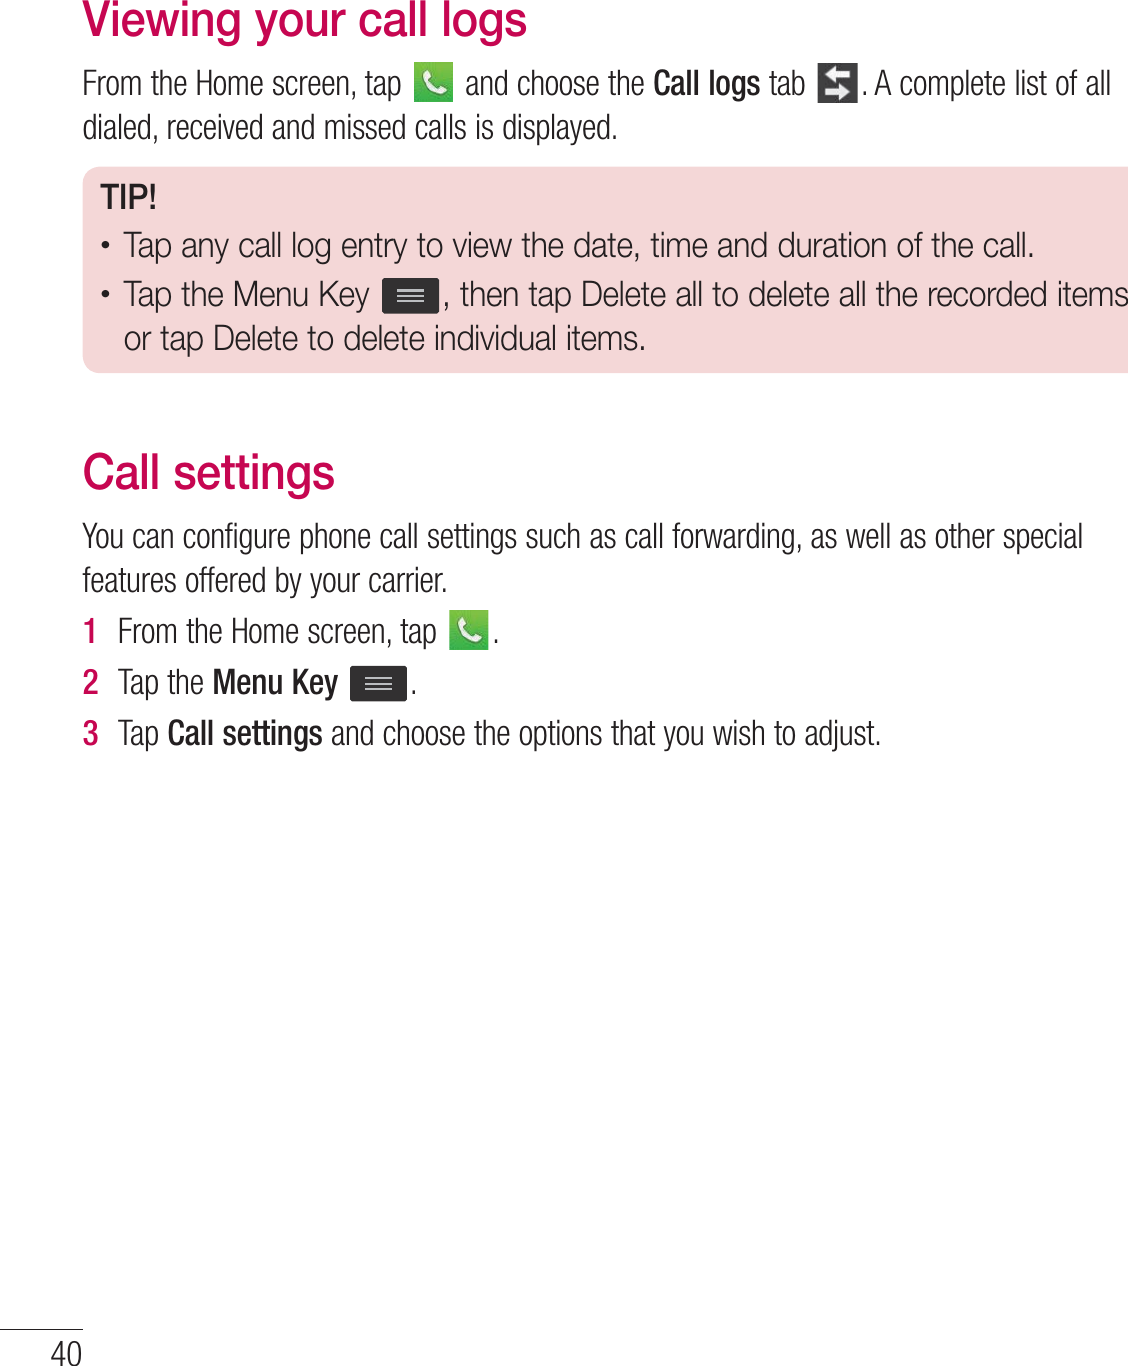 Viewing your call logs&apos;SPNUIF)PNFTDSFFOUBQ BOEDIPPTFUIFCall logsUBC &quot;DPNQMFUFMJTUPGBMMEJBMFESFDFJWFEBOENJTTFEDBMMTJTEJTQMBZFETIP!tTap any call log entry to view the date, time and duration of the call.tTap the Menu Key  , then tap Delete all to delete all the recorded items or tap Delete to delete individual items.Call settings:PVDBODPOGJHVSFQIPOFDBMMTFUUJOHTTVDIBTDBMMGPSXBSEJOHBTXFMMBTPUIFSTQFDJBMGFBUVSFTPGGFSFECZZPVSDBSSJFS1  &apos;SPNUIF)PNFTDSFFOUBQ 2  5BQUIFMenu Key3  5BQCall settingsBOEDIPPTFUIFPQUJPOTUIBUZPVXJTIUPBEKVTU